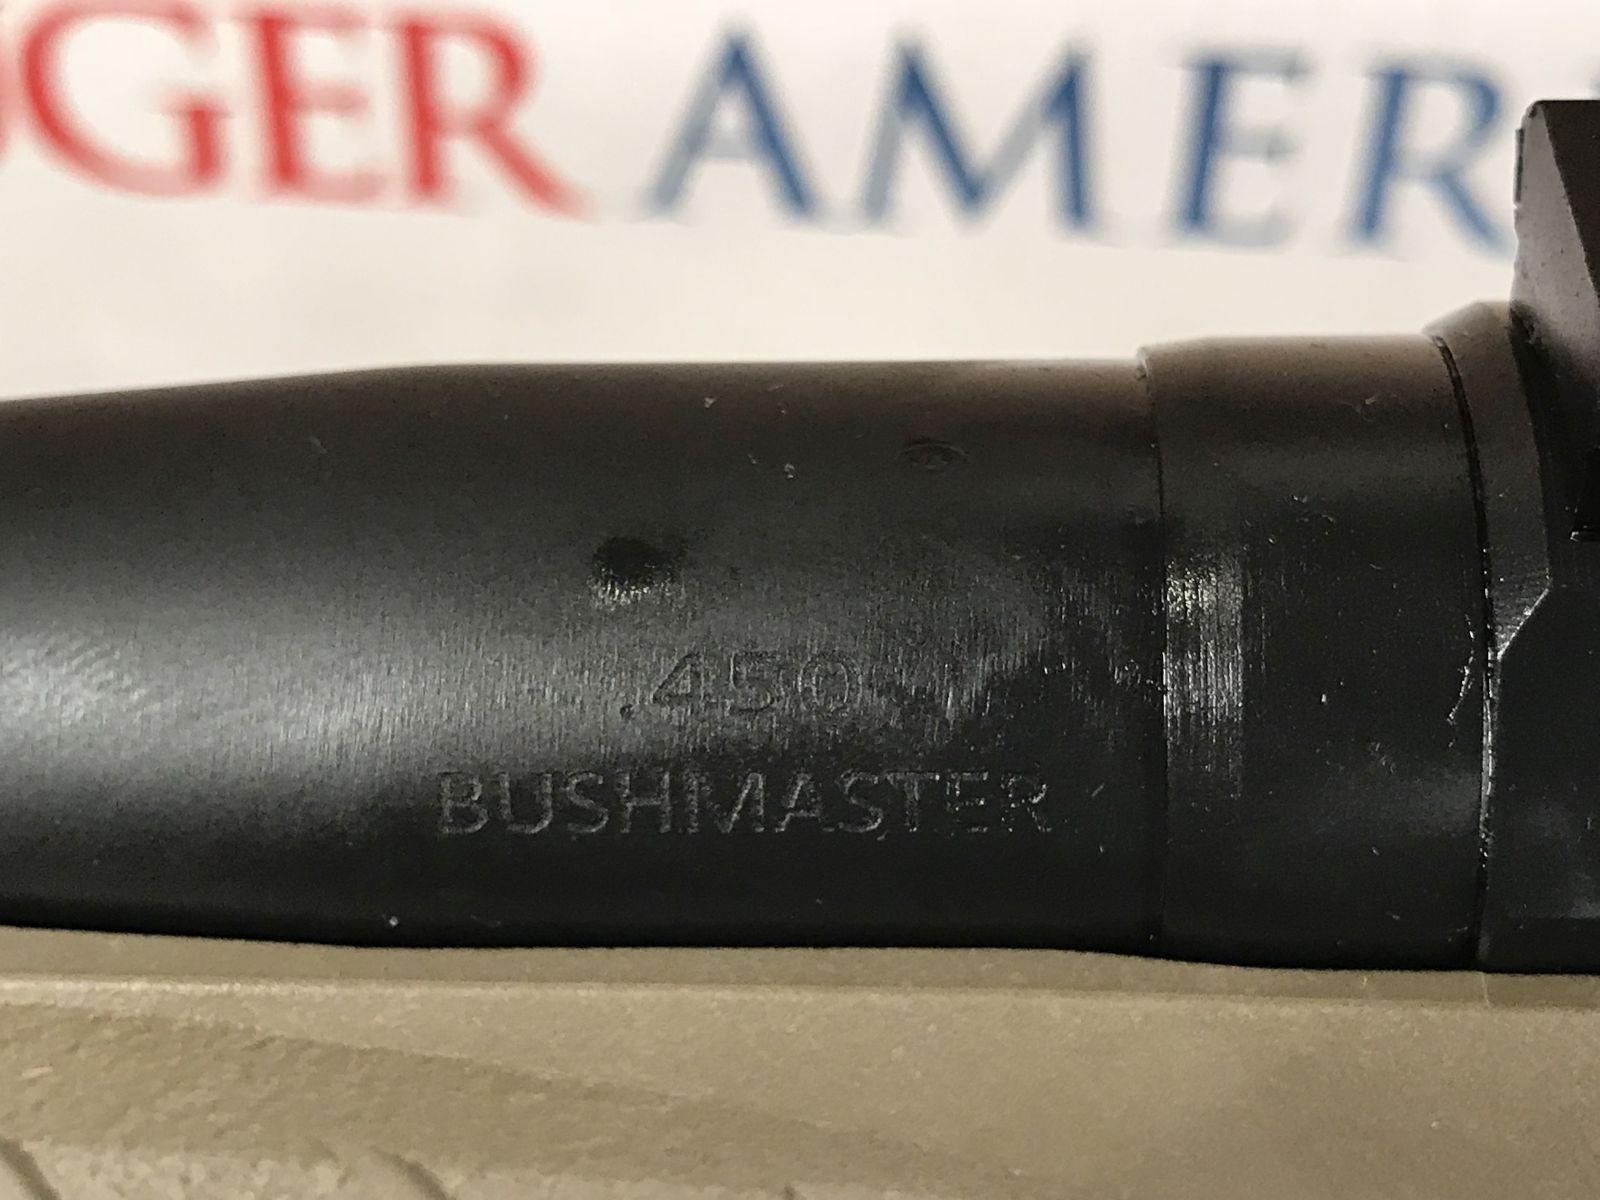 9A. Ruger American .450 Bushmaster, Muzzle Brake SN:690106964